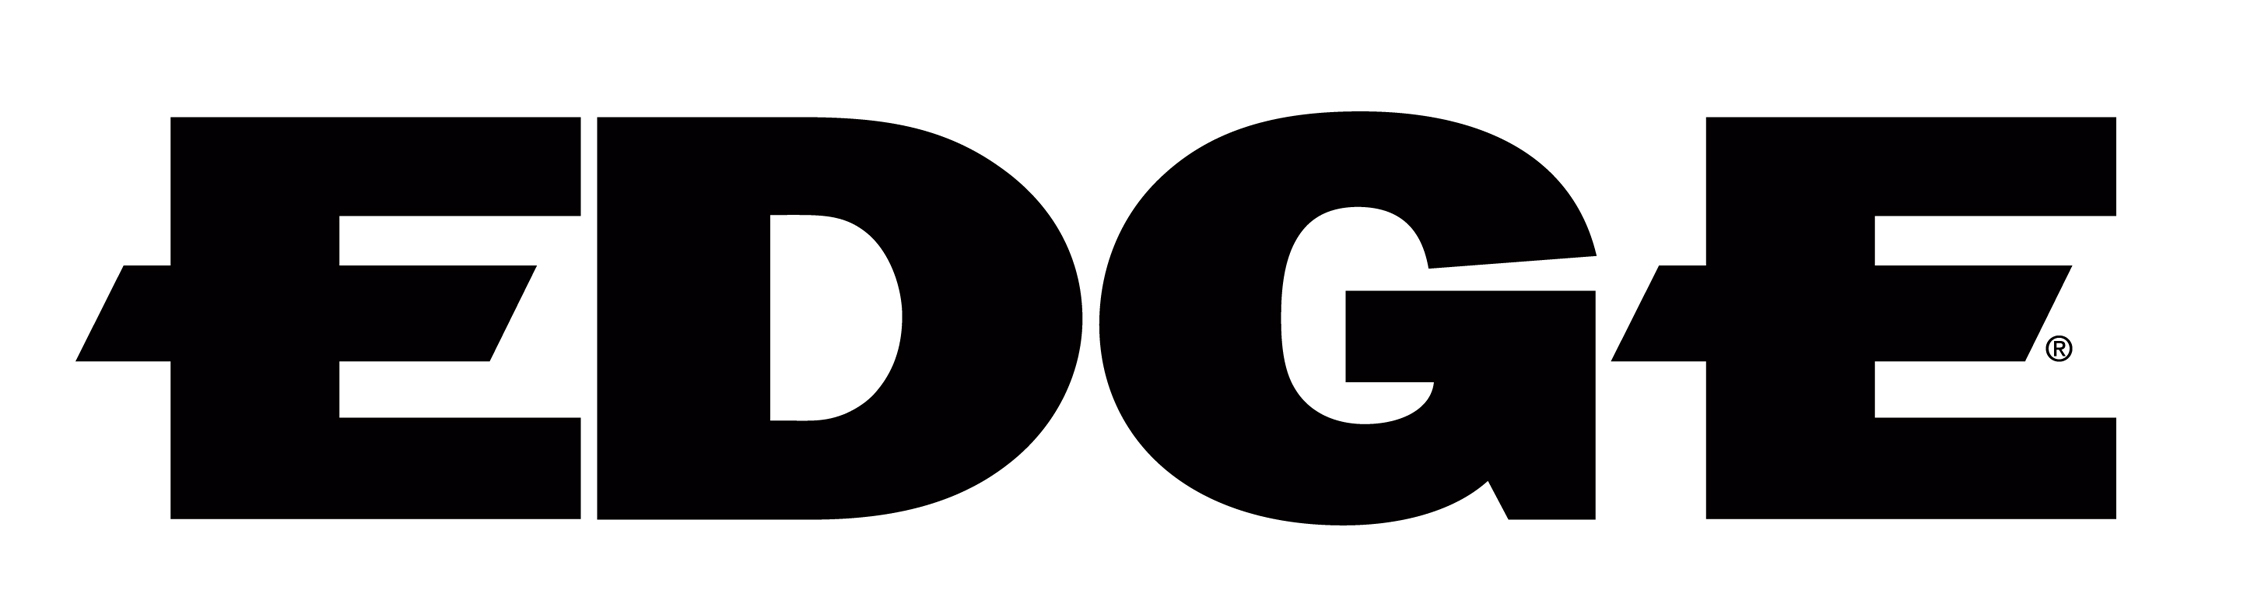 edge magazine logo